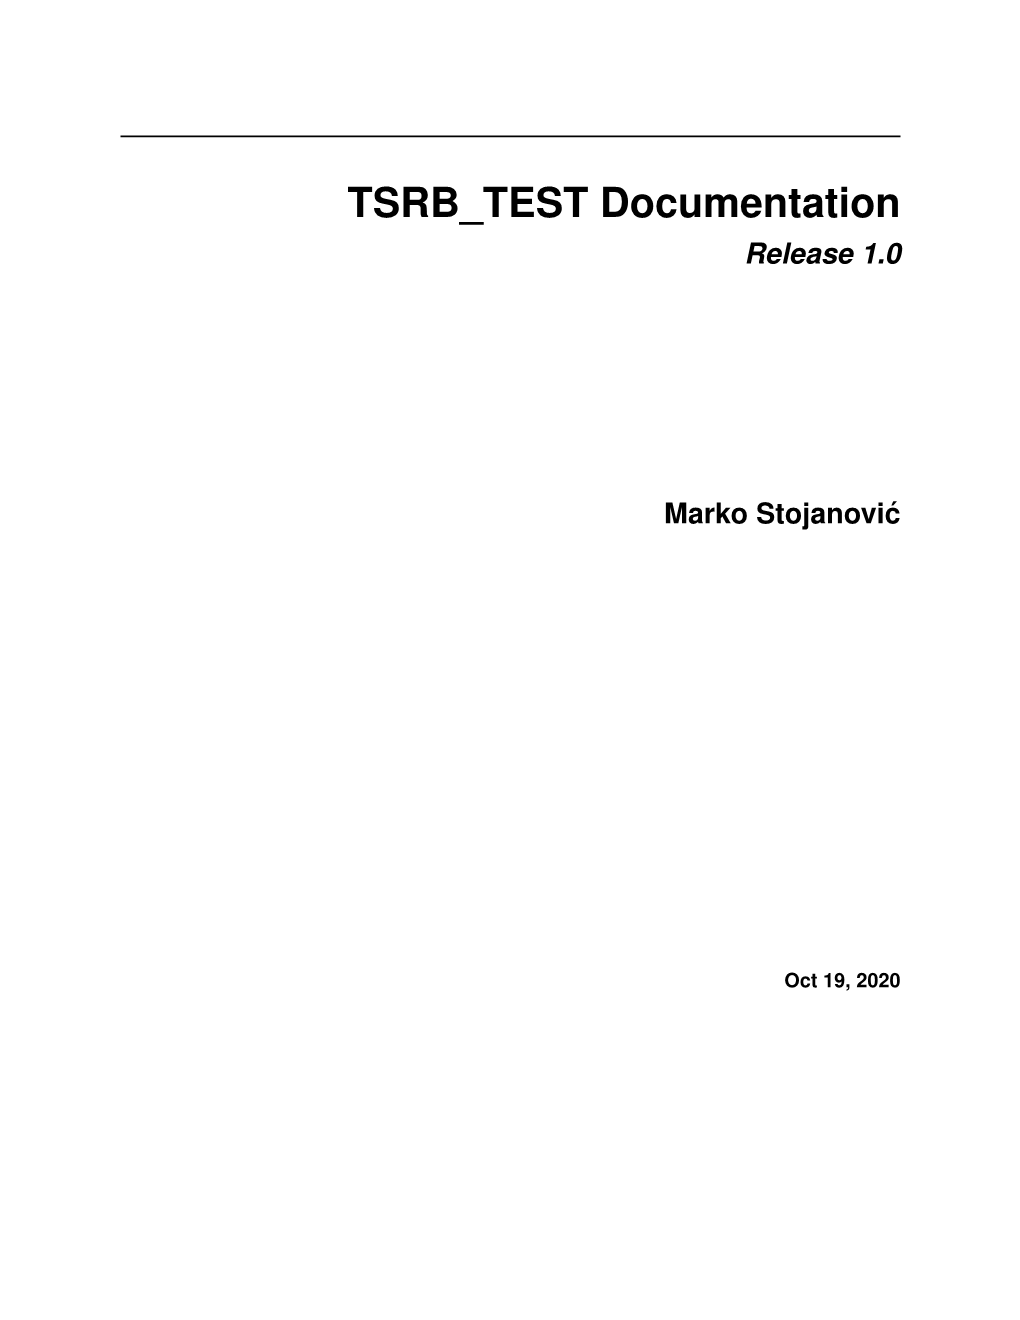 TSRB TEST Documentation Release 1.0